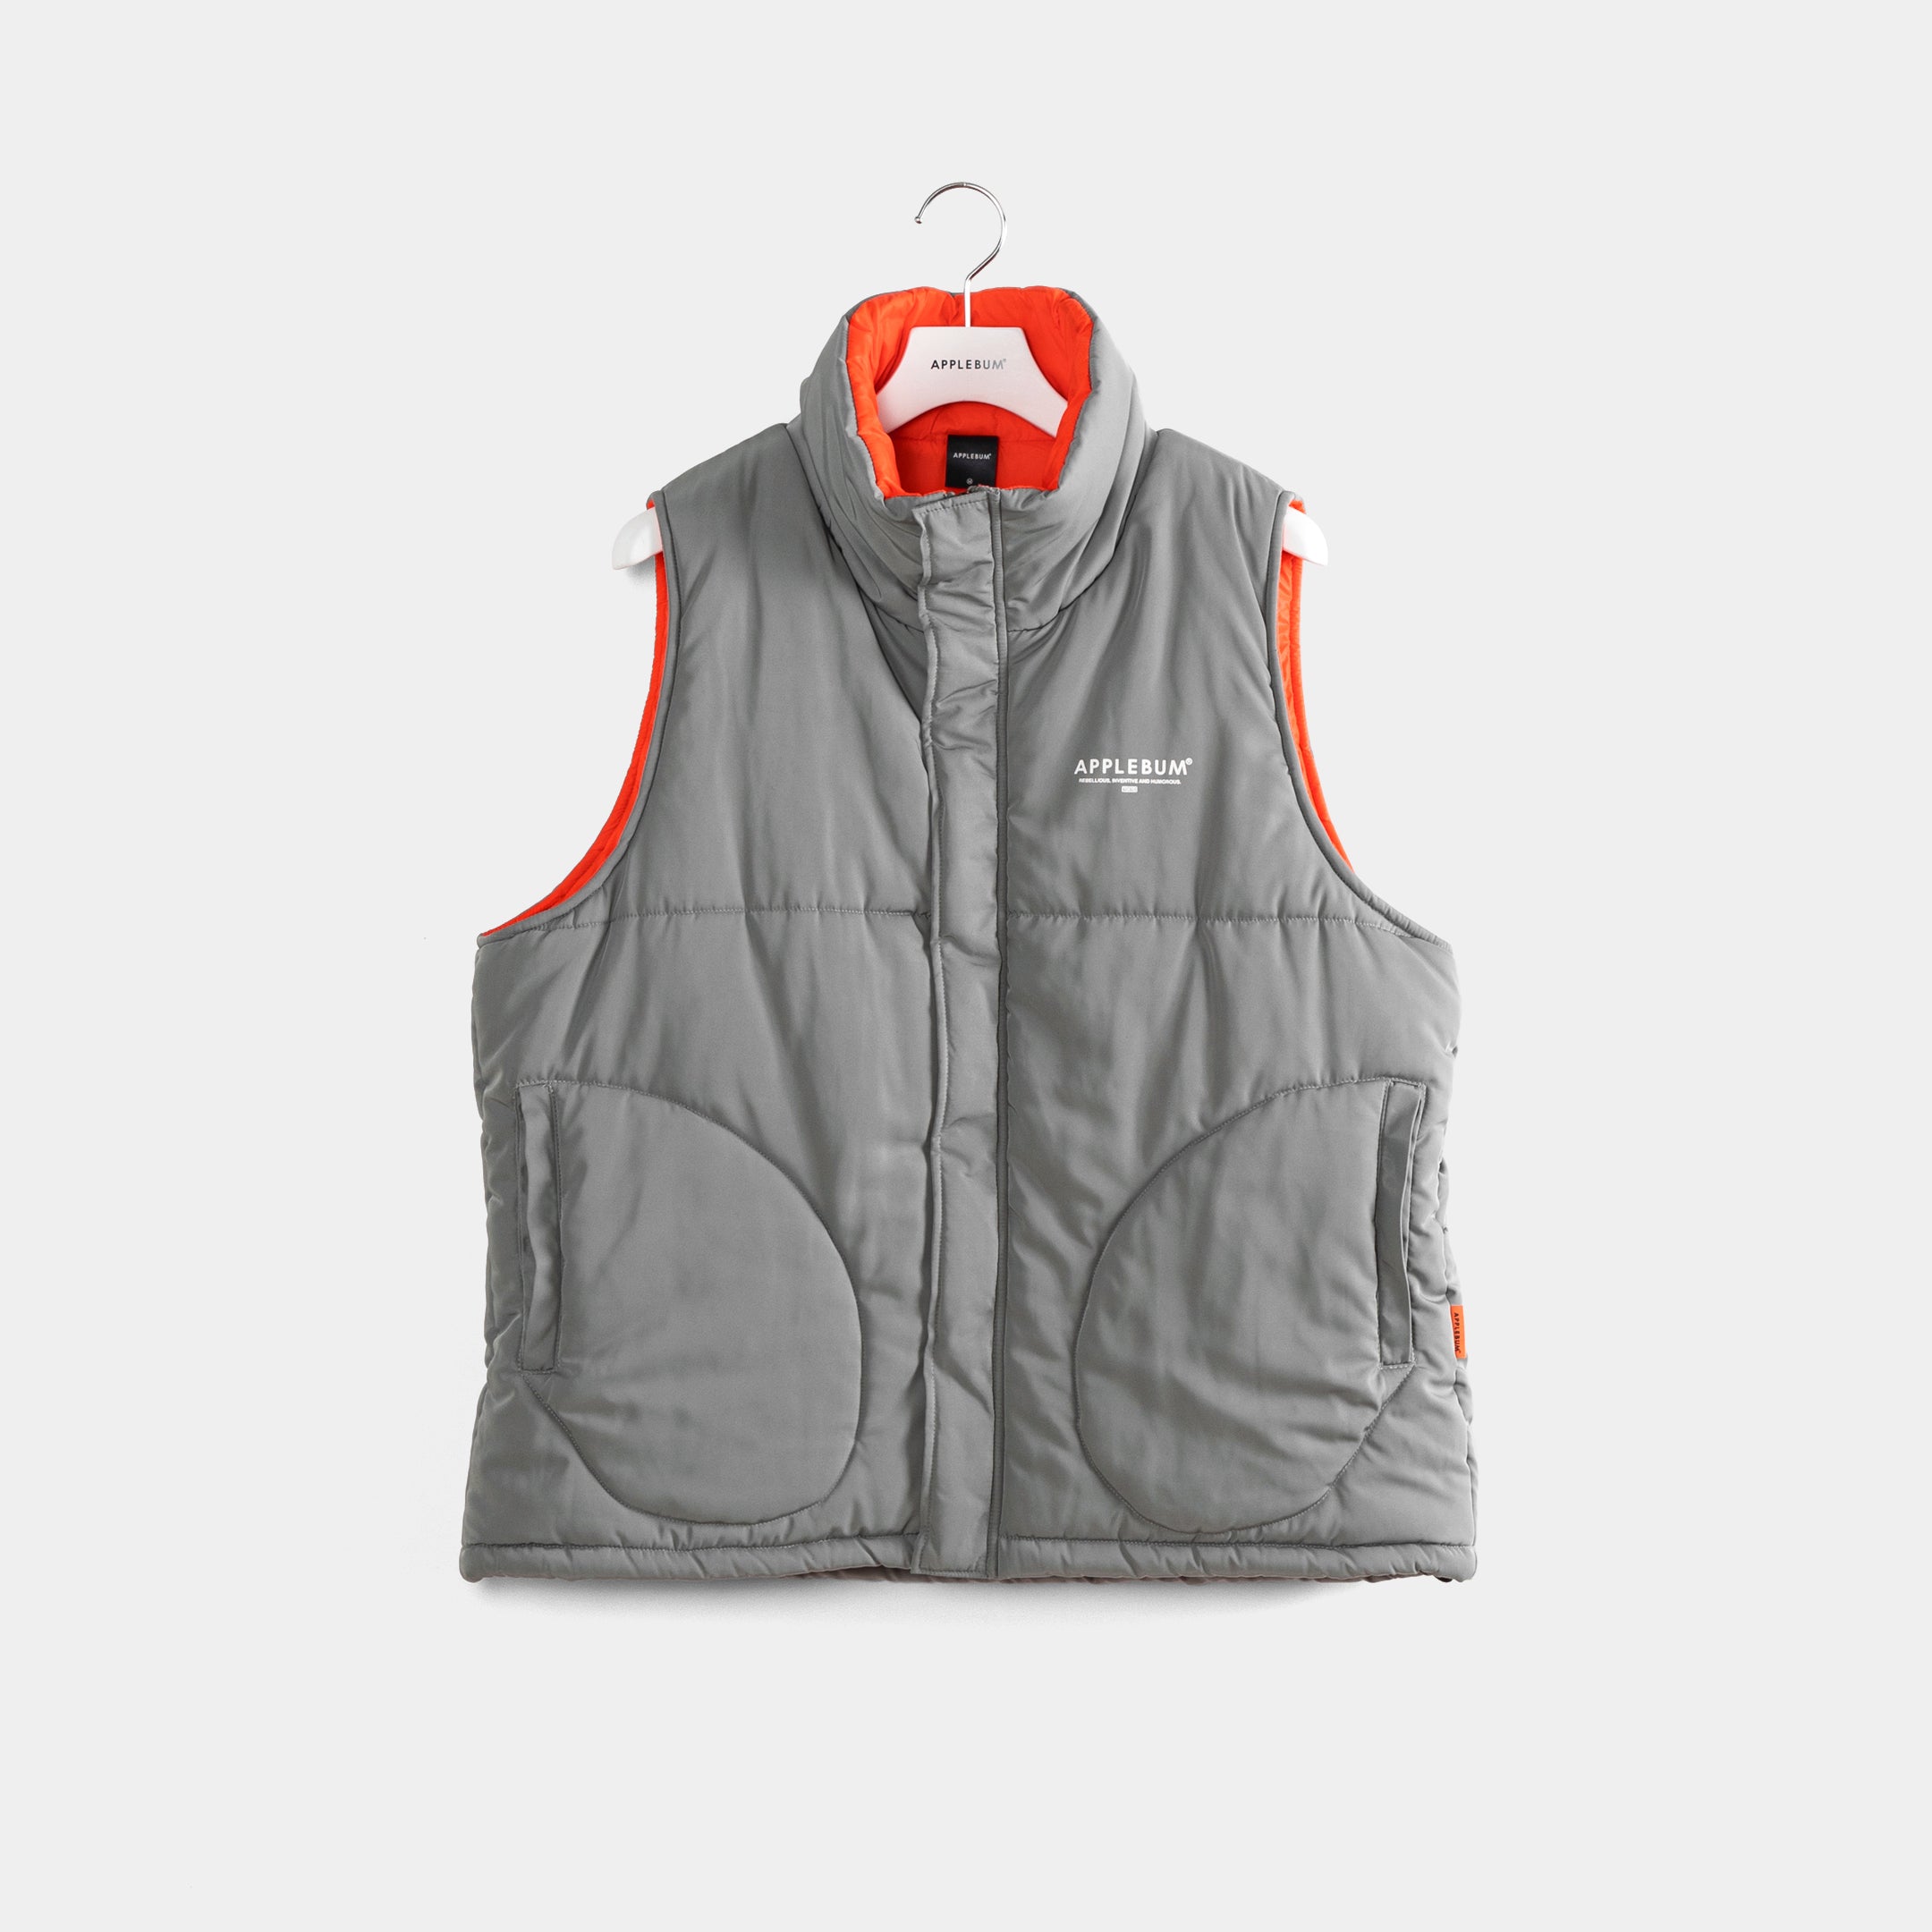 Military Innercotton Vest [Gray] / 2320604